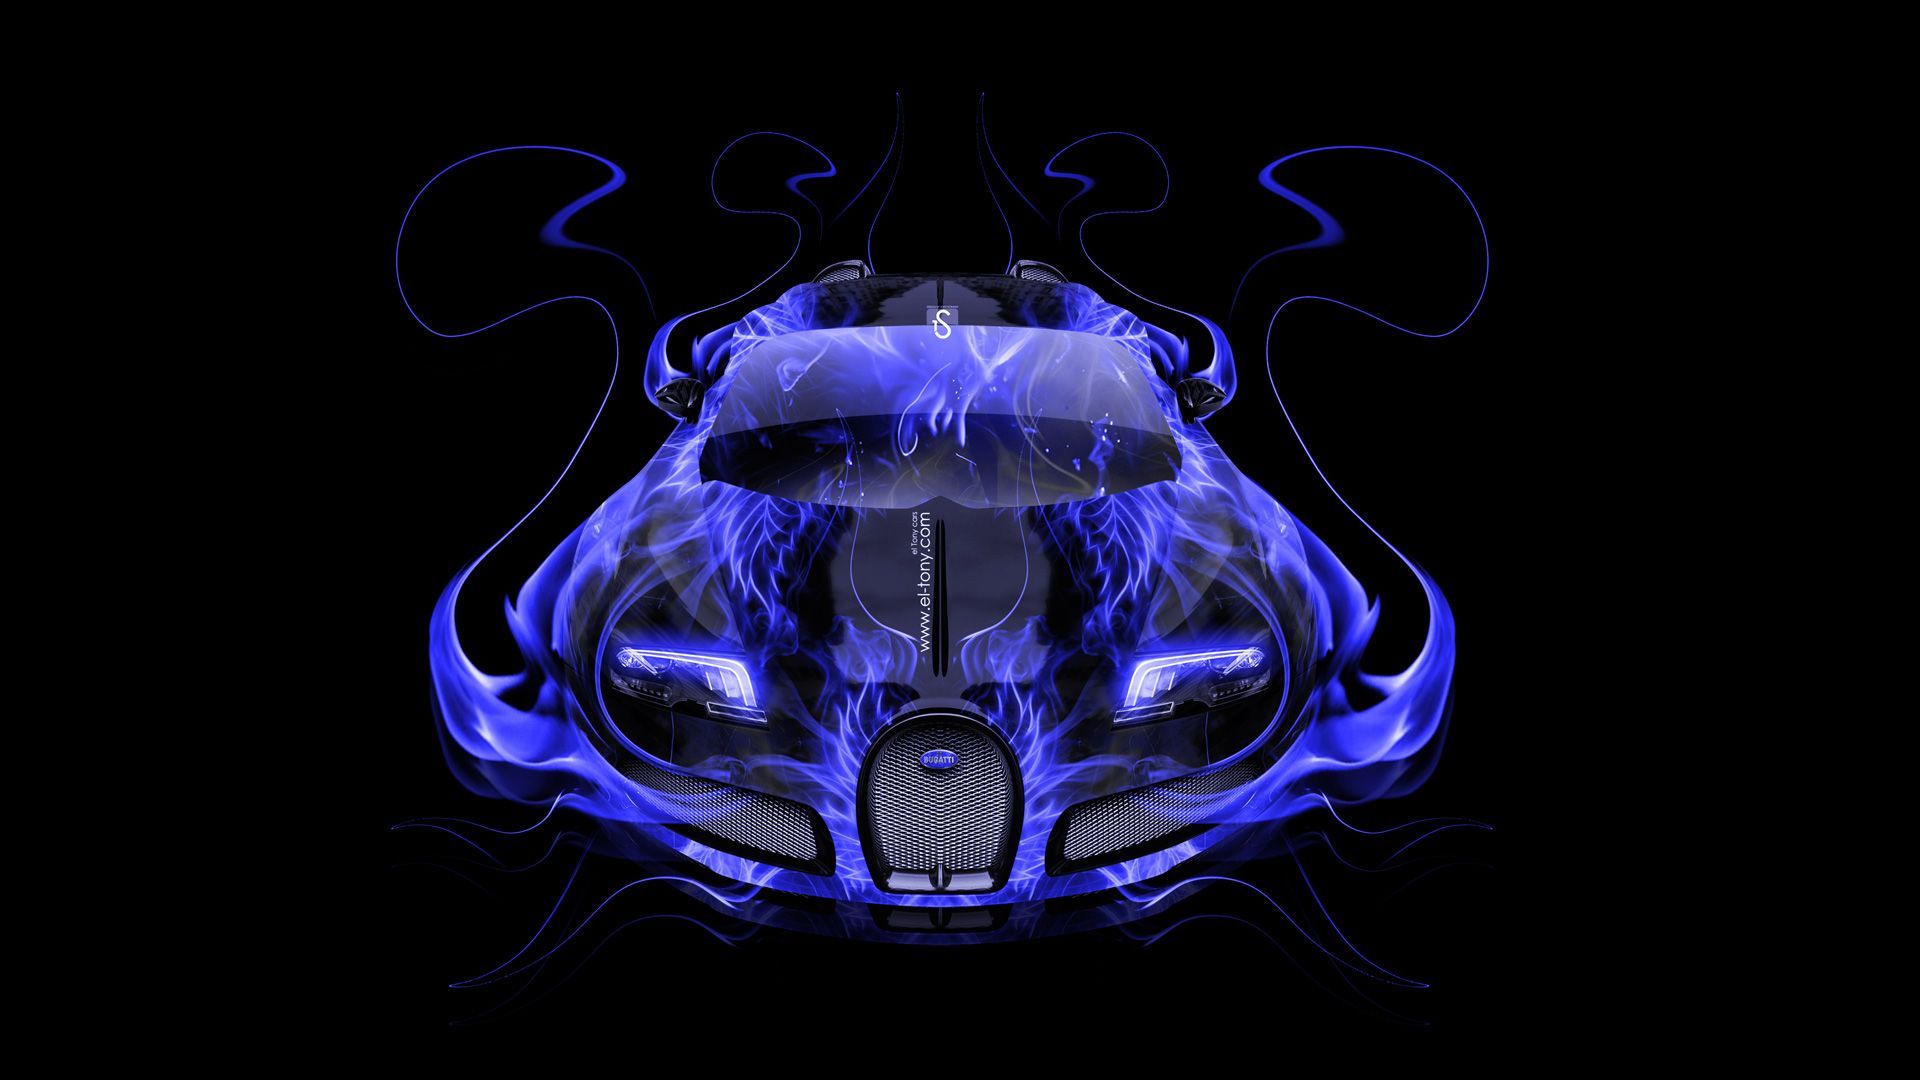 bugatti veyron fantasy tiger blue fire car 2014 HD wallpaper design Car Picture. HD wallpaper, Bugatti, Veyron